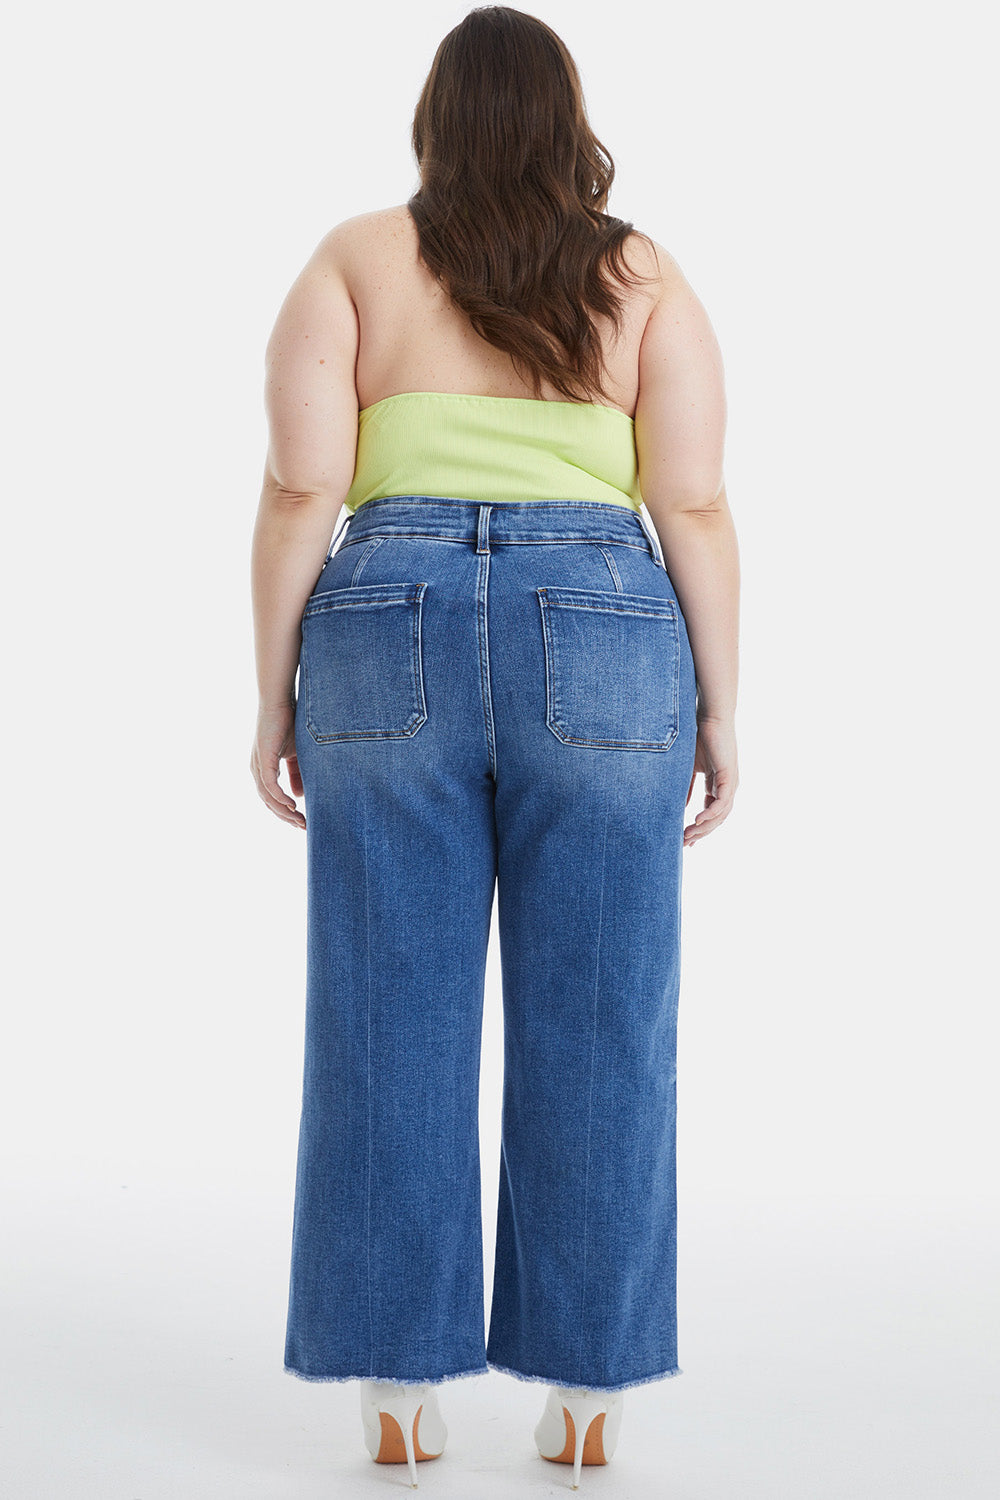 Full Size High-Waist Jeans